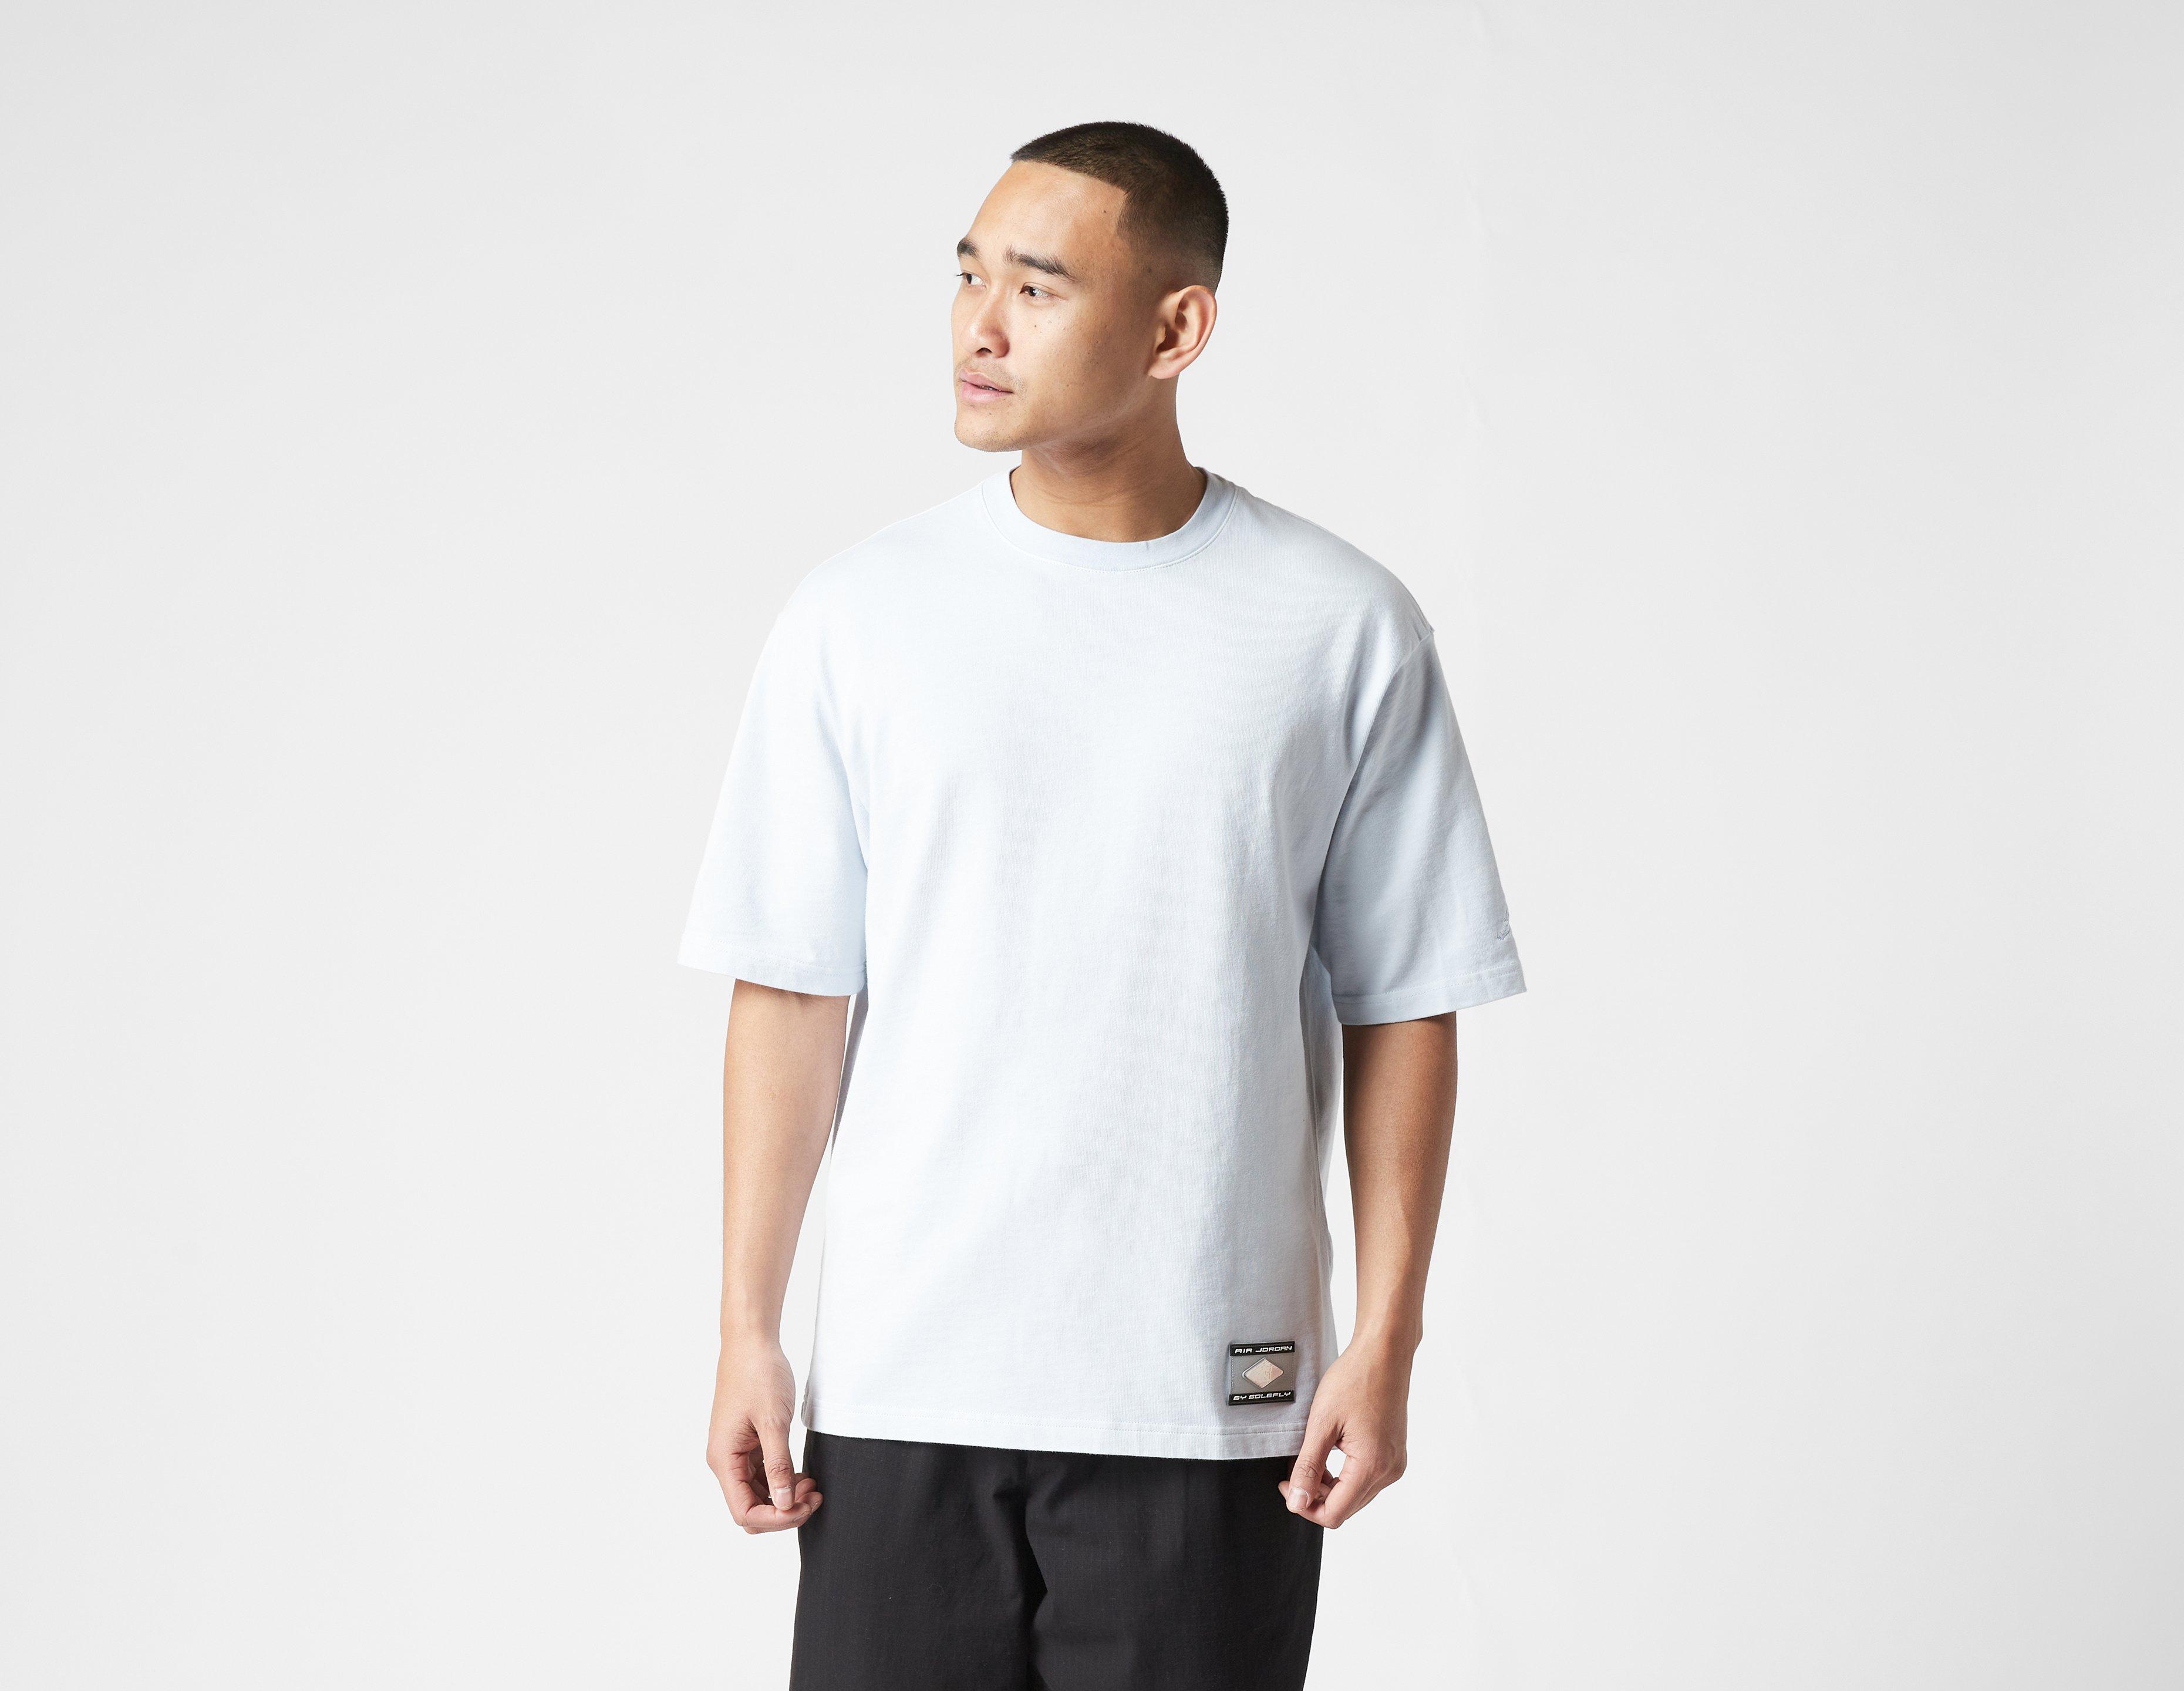 Jordan - Jordan Shirt Grey I HealthdesignShops Solefly x Original 1 Black - Air Toes | T